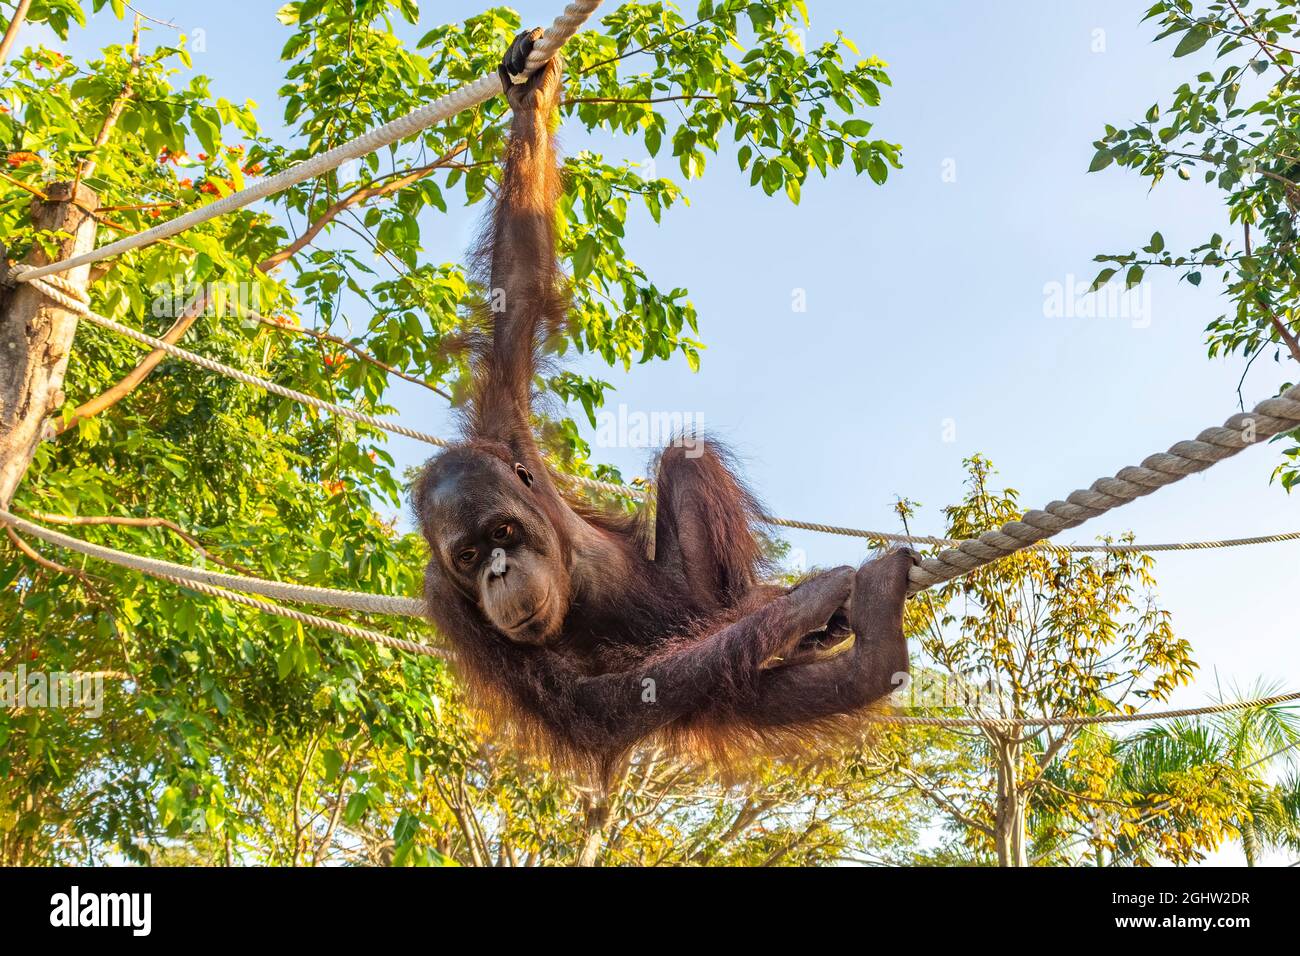 Juvenile Orangutan hanging on ropes between trees, Indonesia Stock Photo